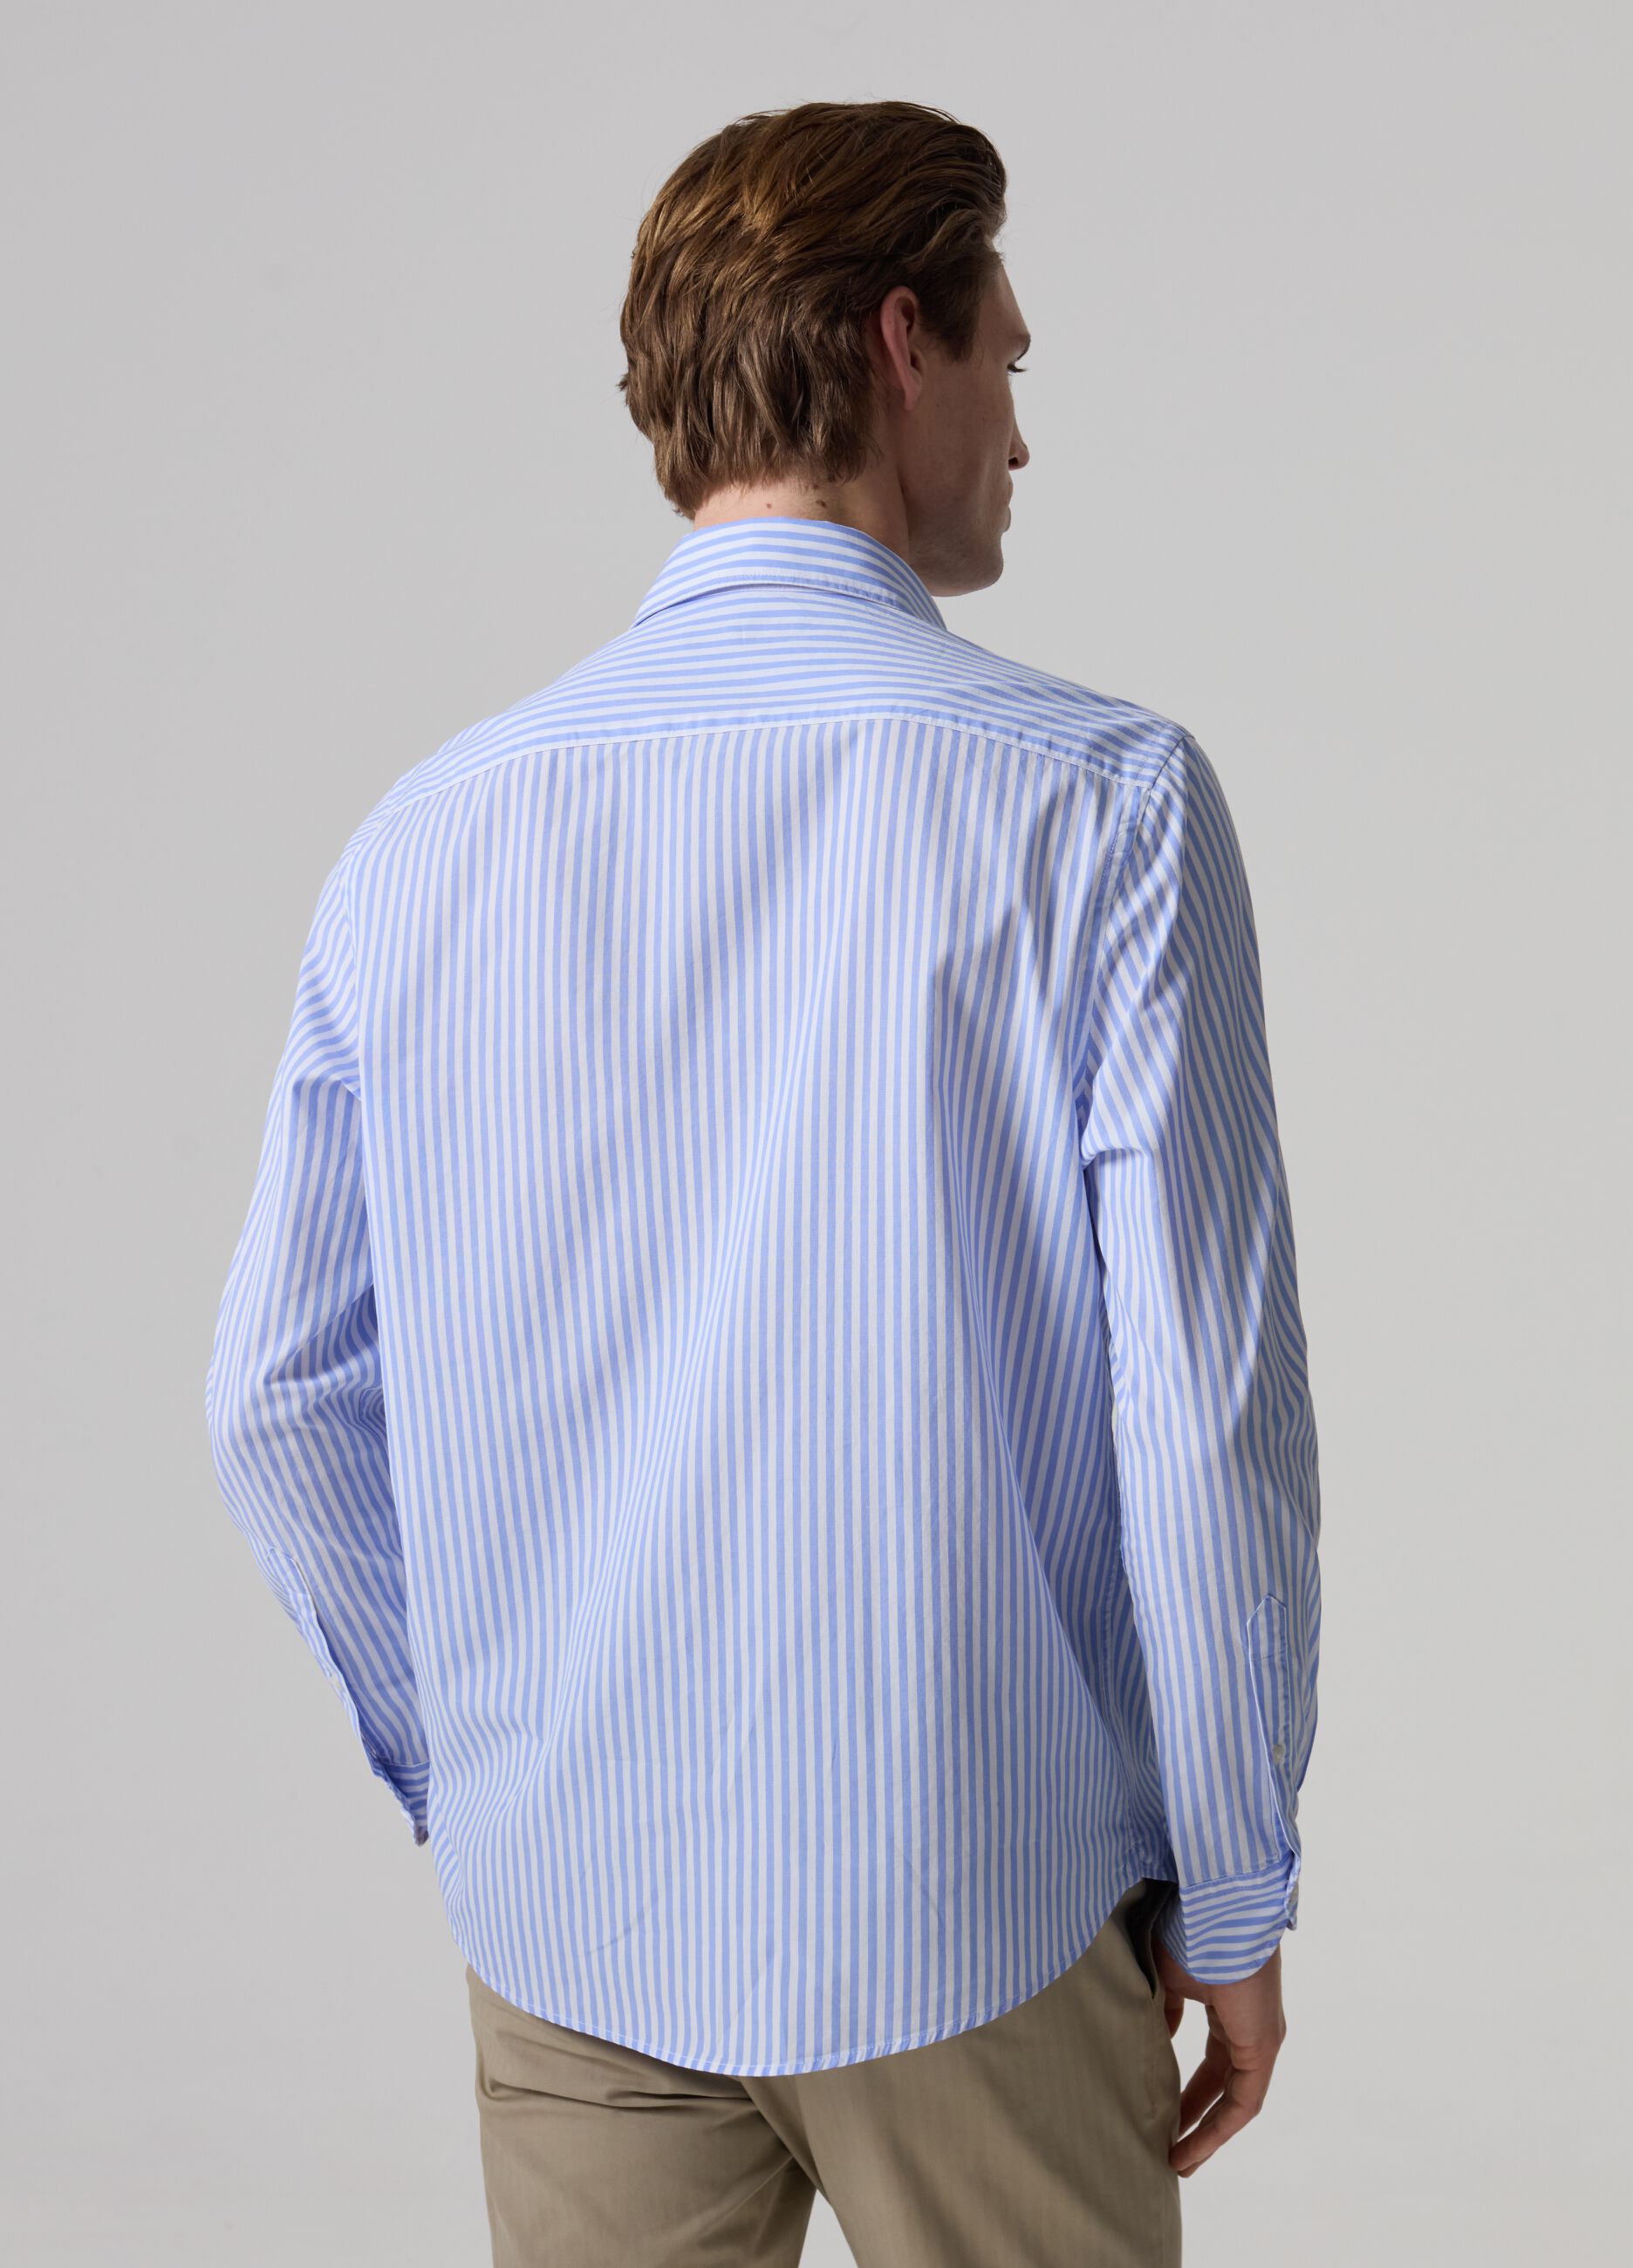 Poplin shirt with striped pattern_2